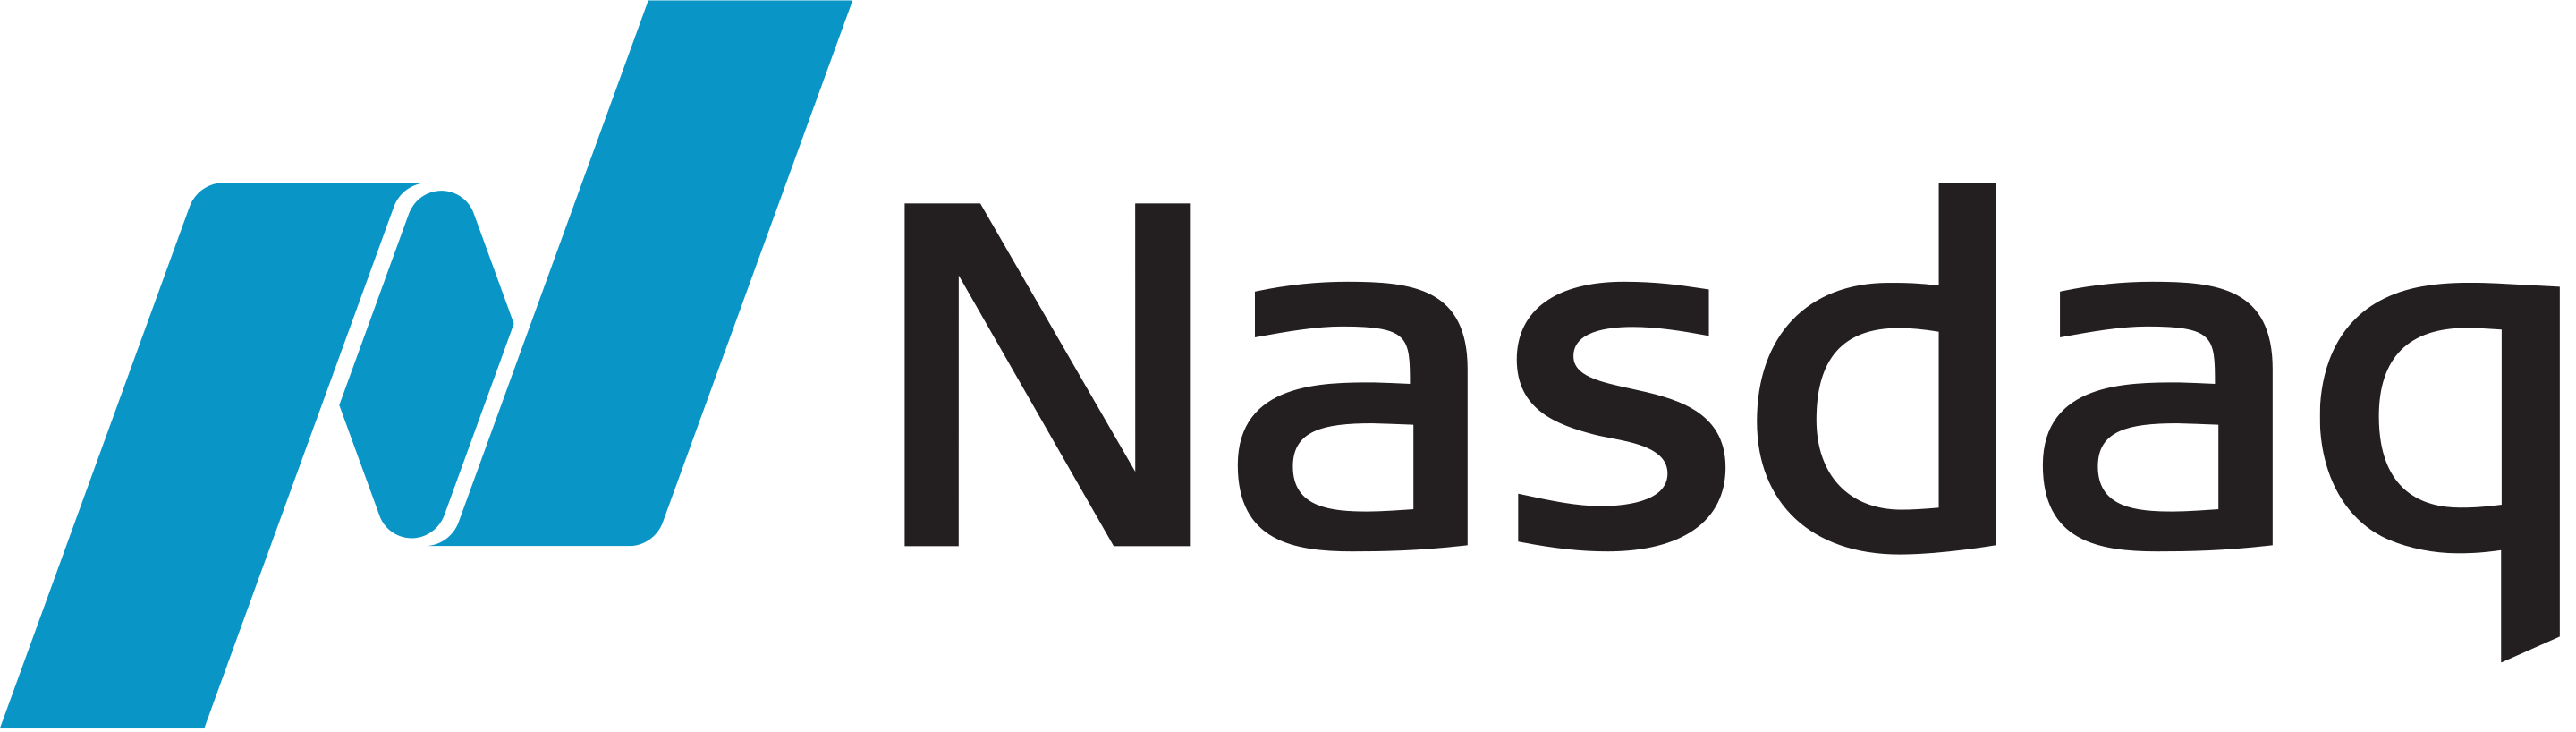 Nasdaq Stock Market - National Association of Securities Dealers Automated Quotation